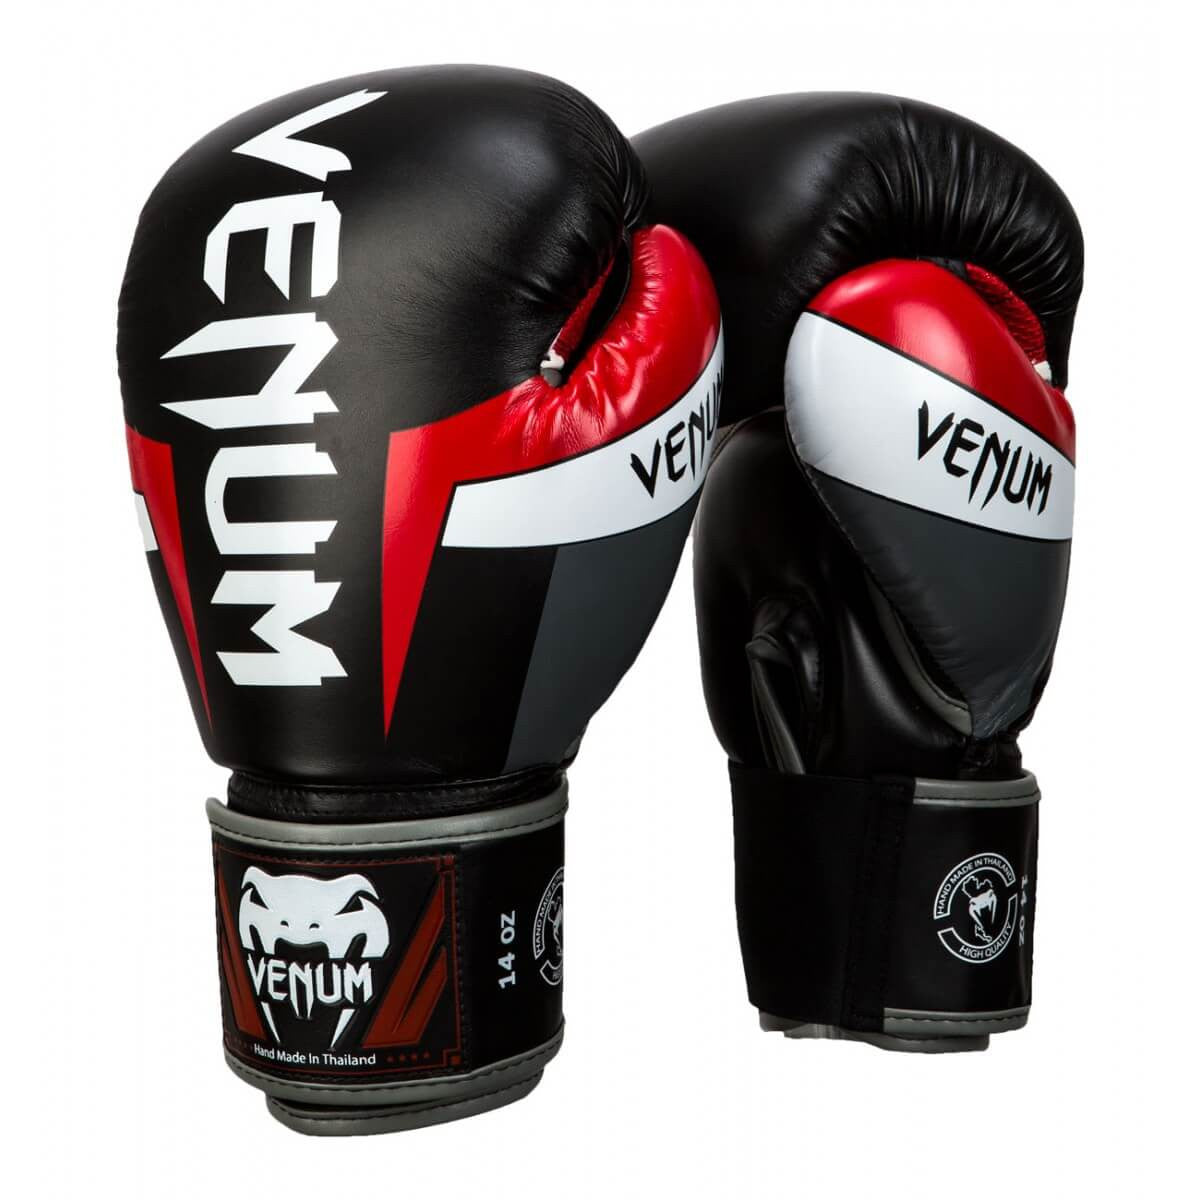 Иов венум. Boxing Gloves Venum Elite Performance. Boxing Gloves Venum vn 121. Чаша Венум.